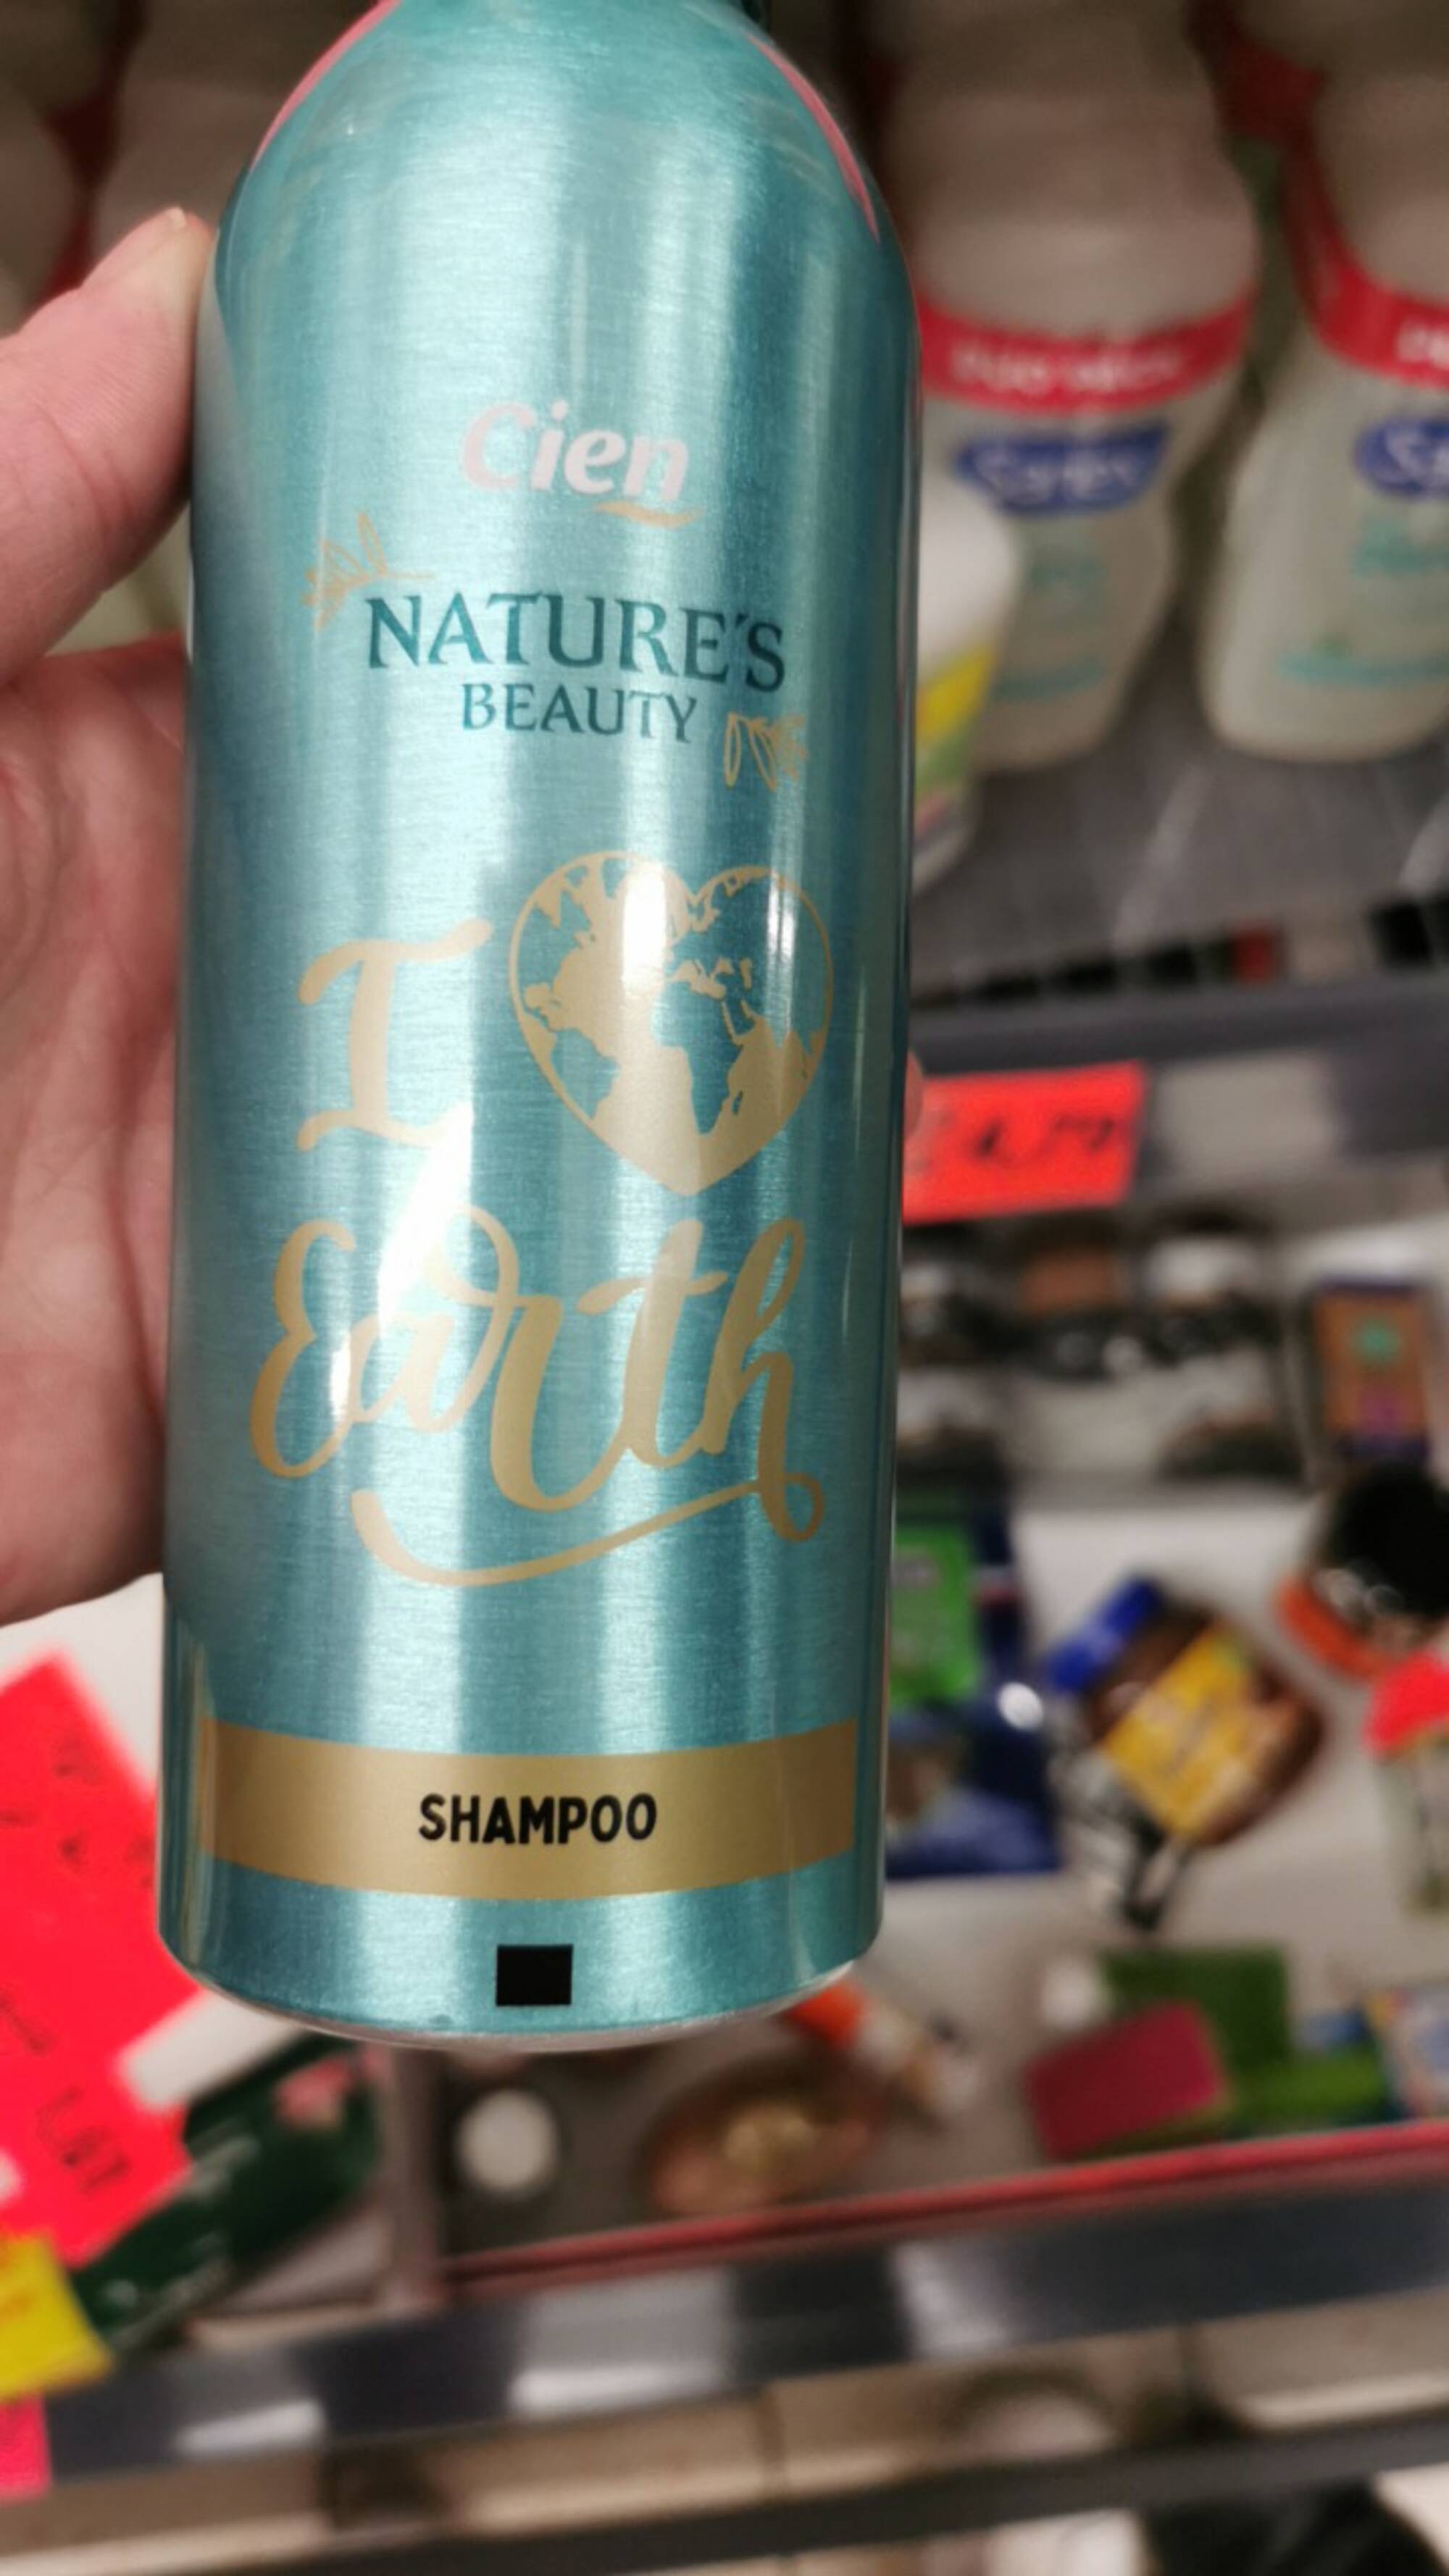 CIEN - Nature's beauty - Shampoo